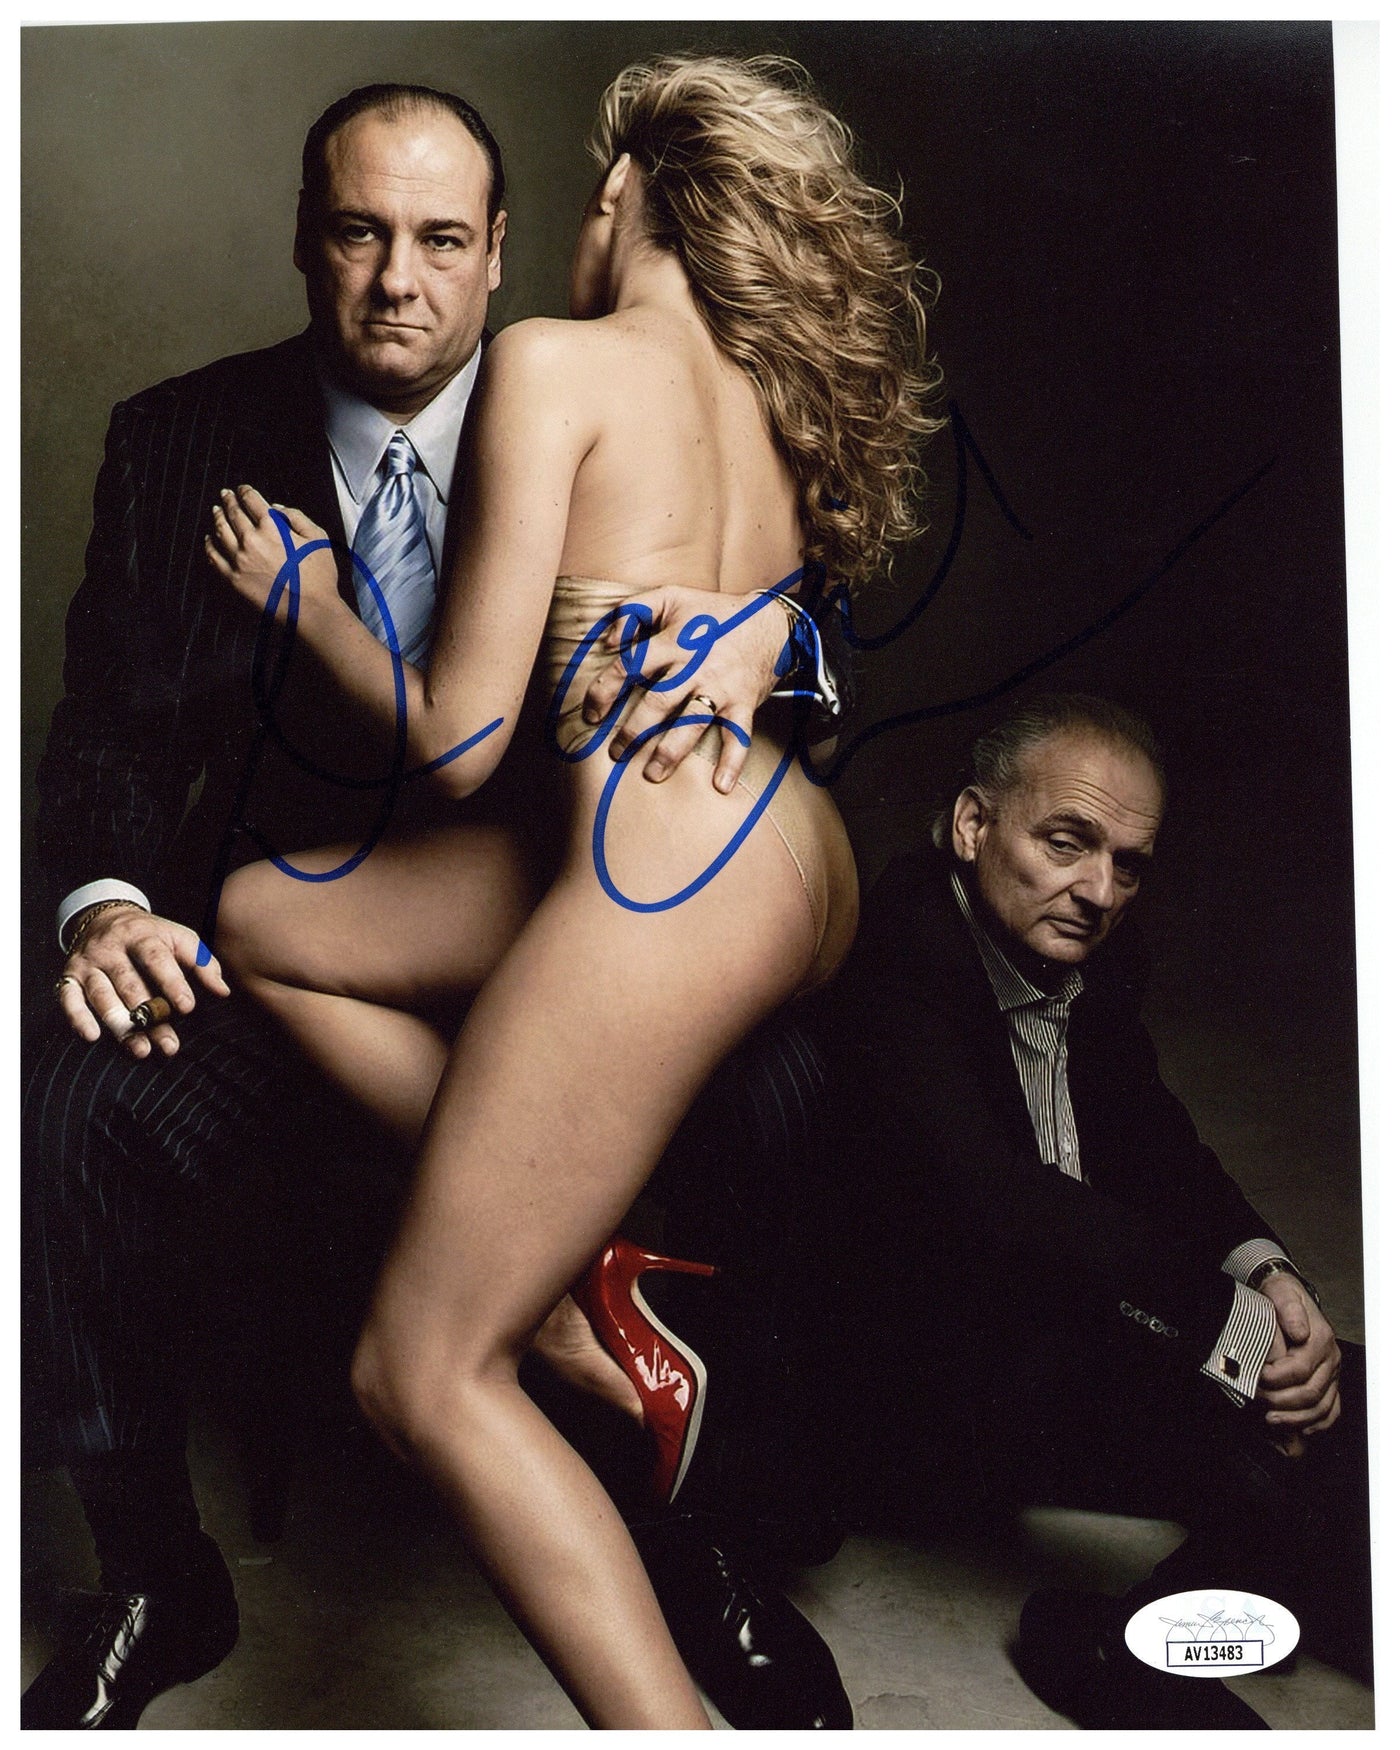 David Chase Signed 8x10 Photo The Sopranos Authentic Autographed JSA COA